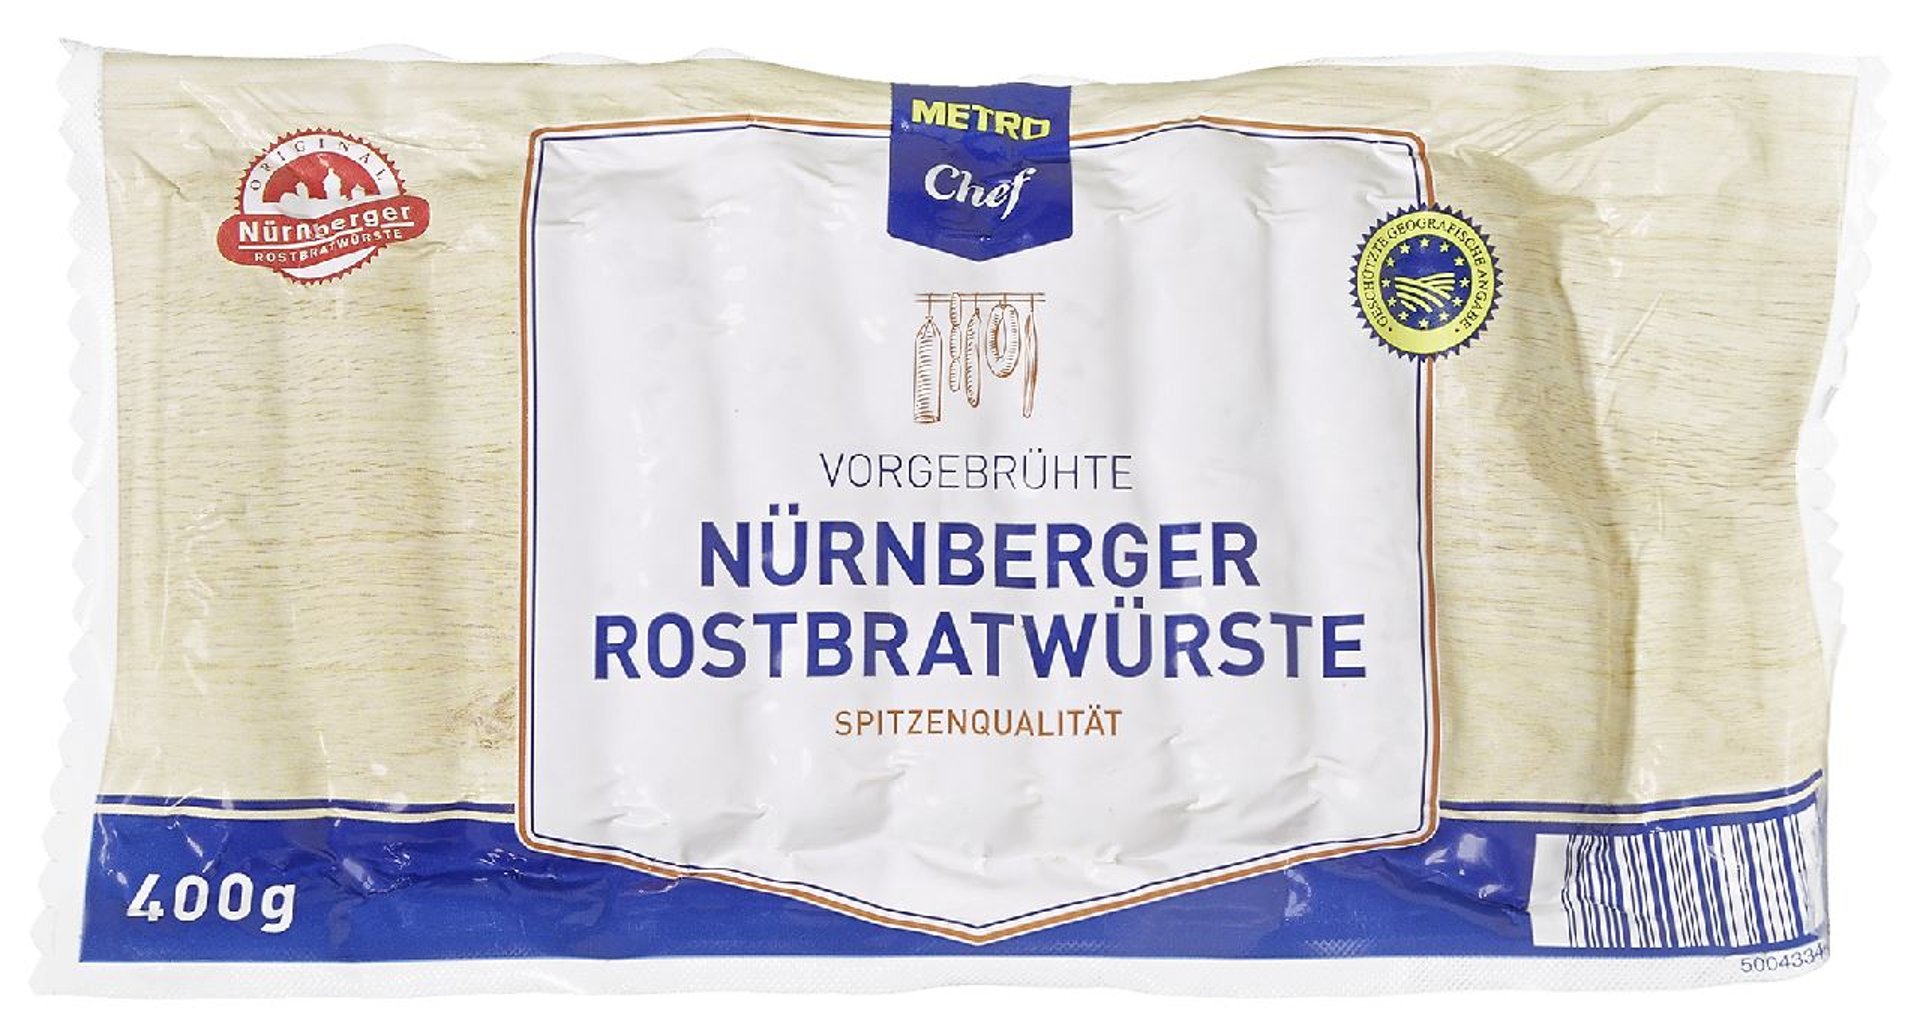 METRO Chef - Original Nürnberger Rostbratwurst - 400 g Packung